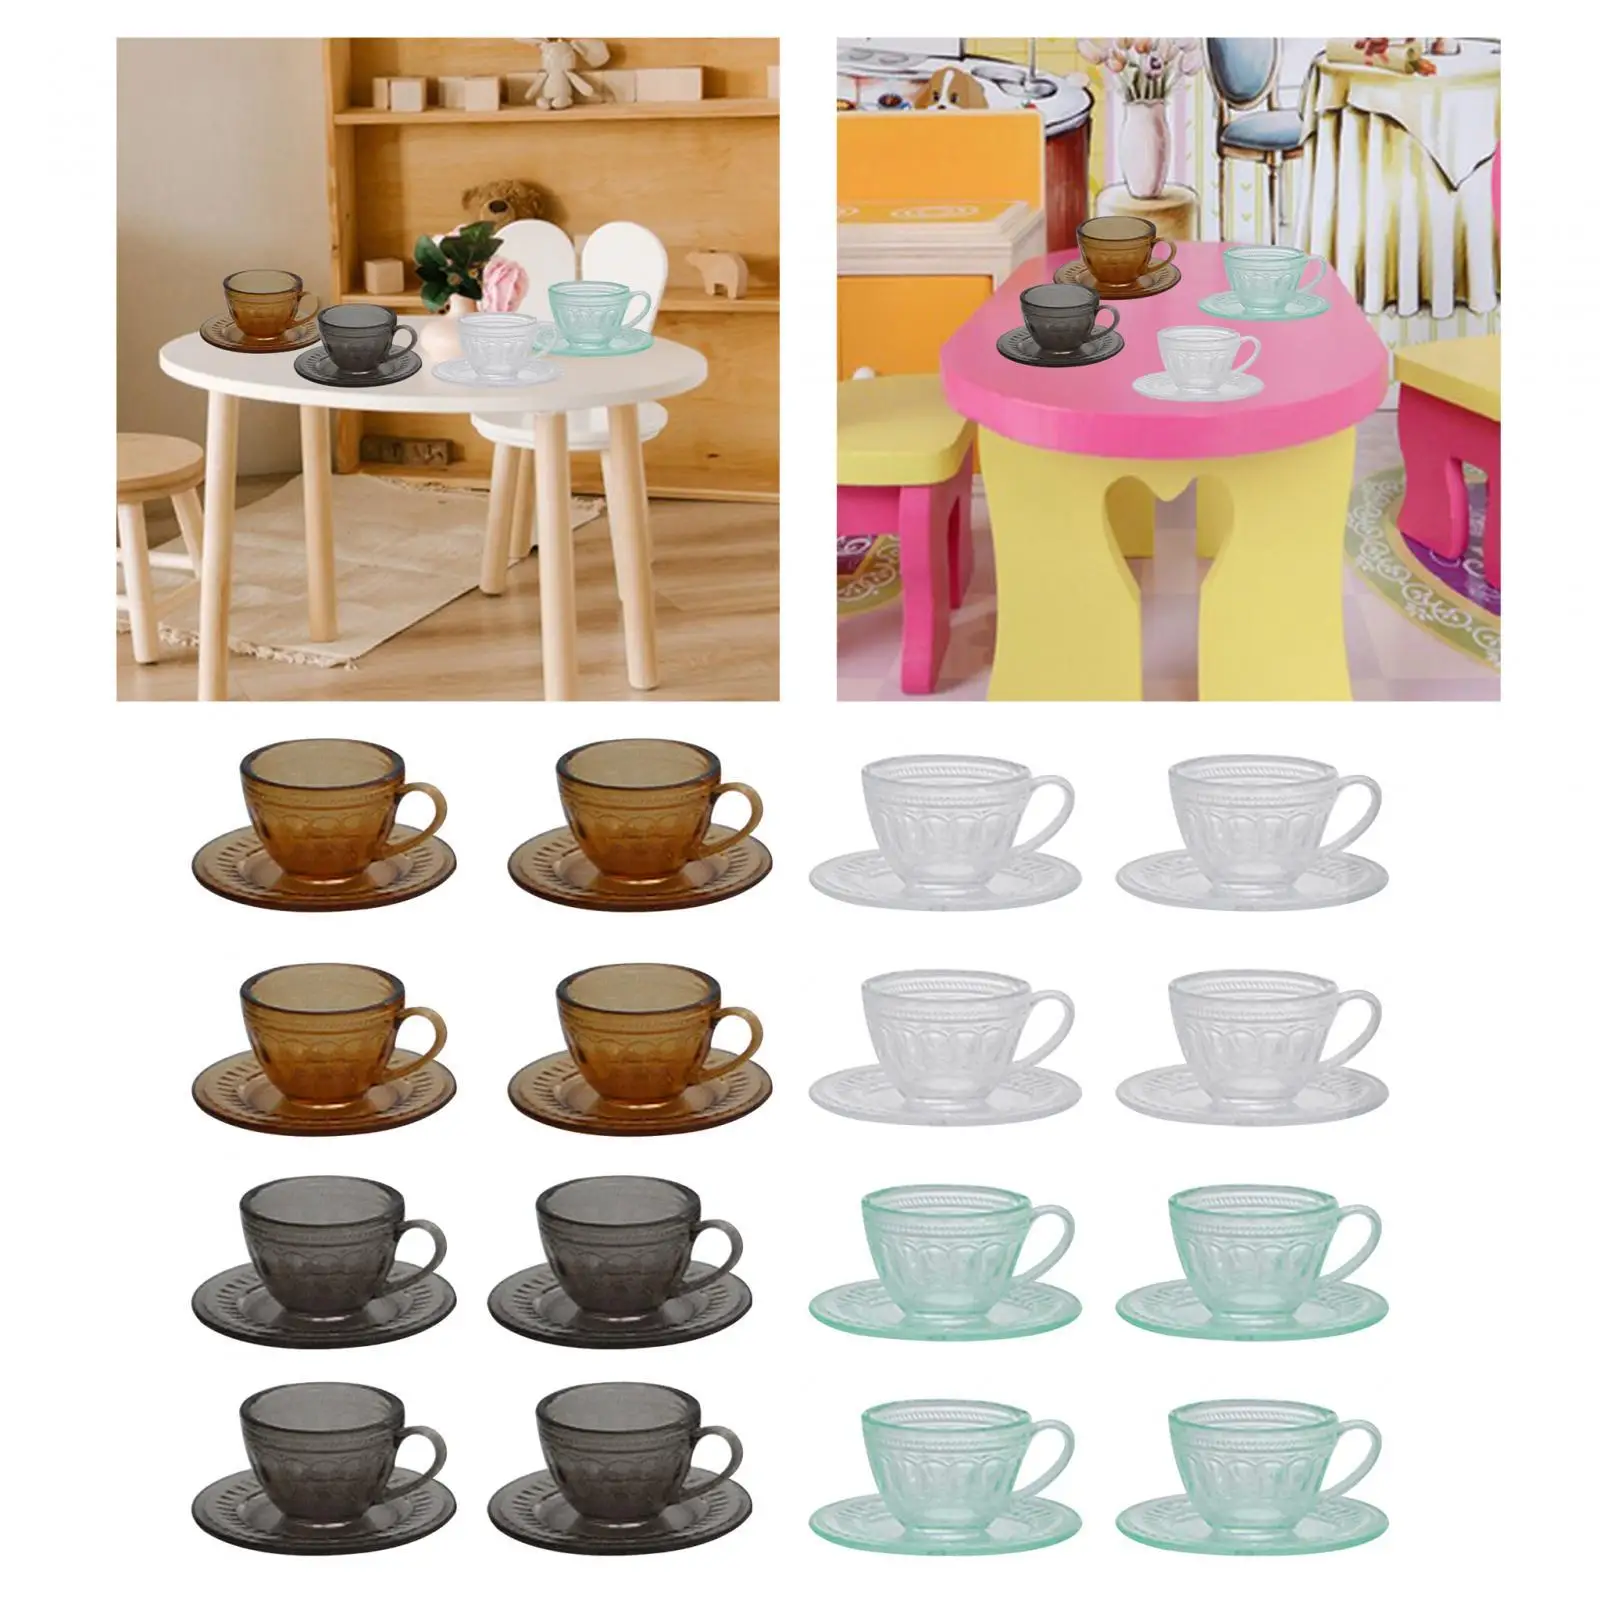 4x Dollhouse Miniature Tea Cup Set Miniature Tableware for Dollhouse Kitchen